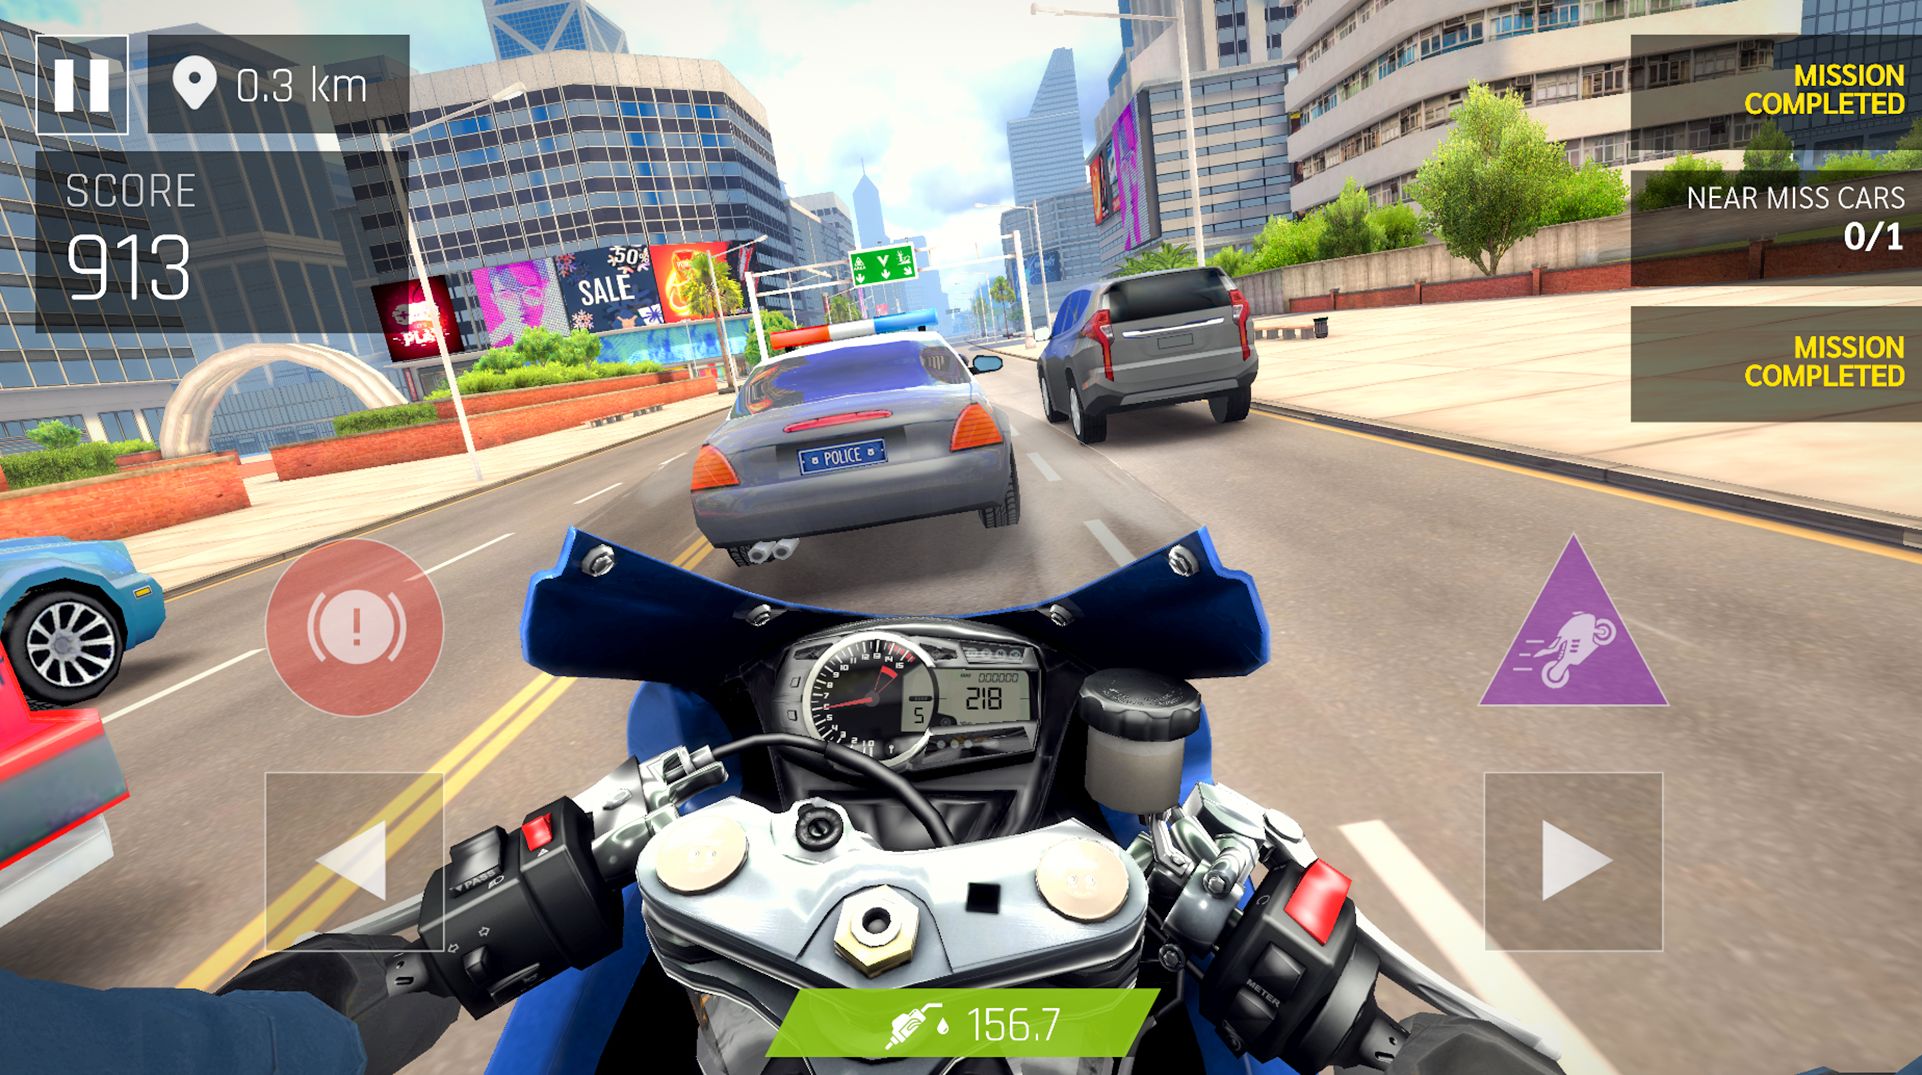 Descargar Real Moto Rider: Traffic Race gratis para Android.